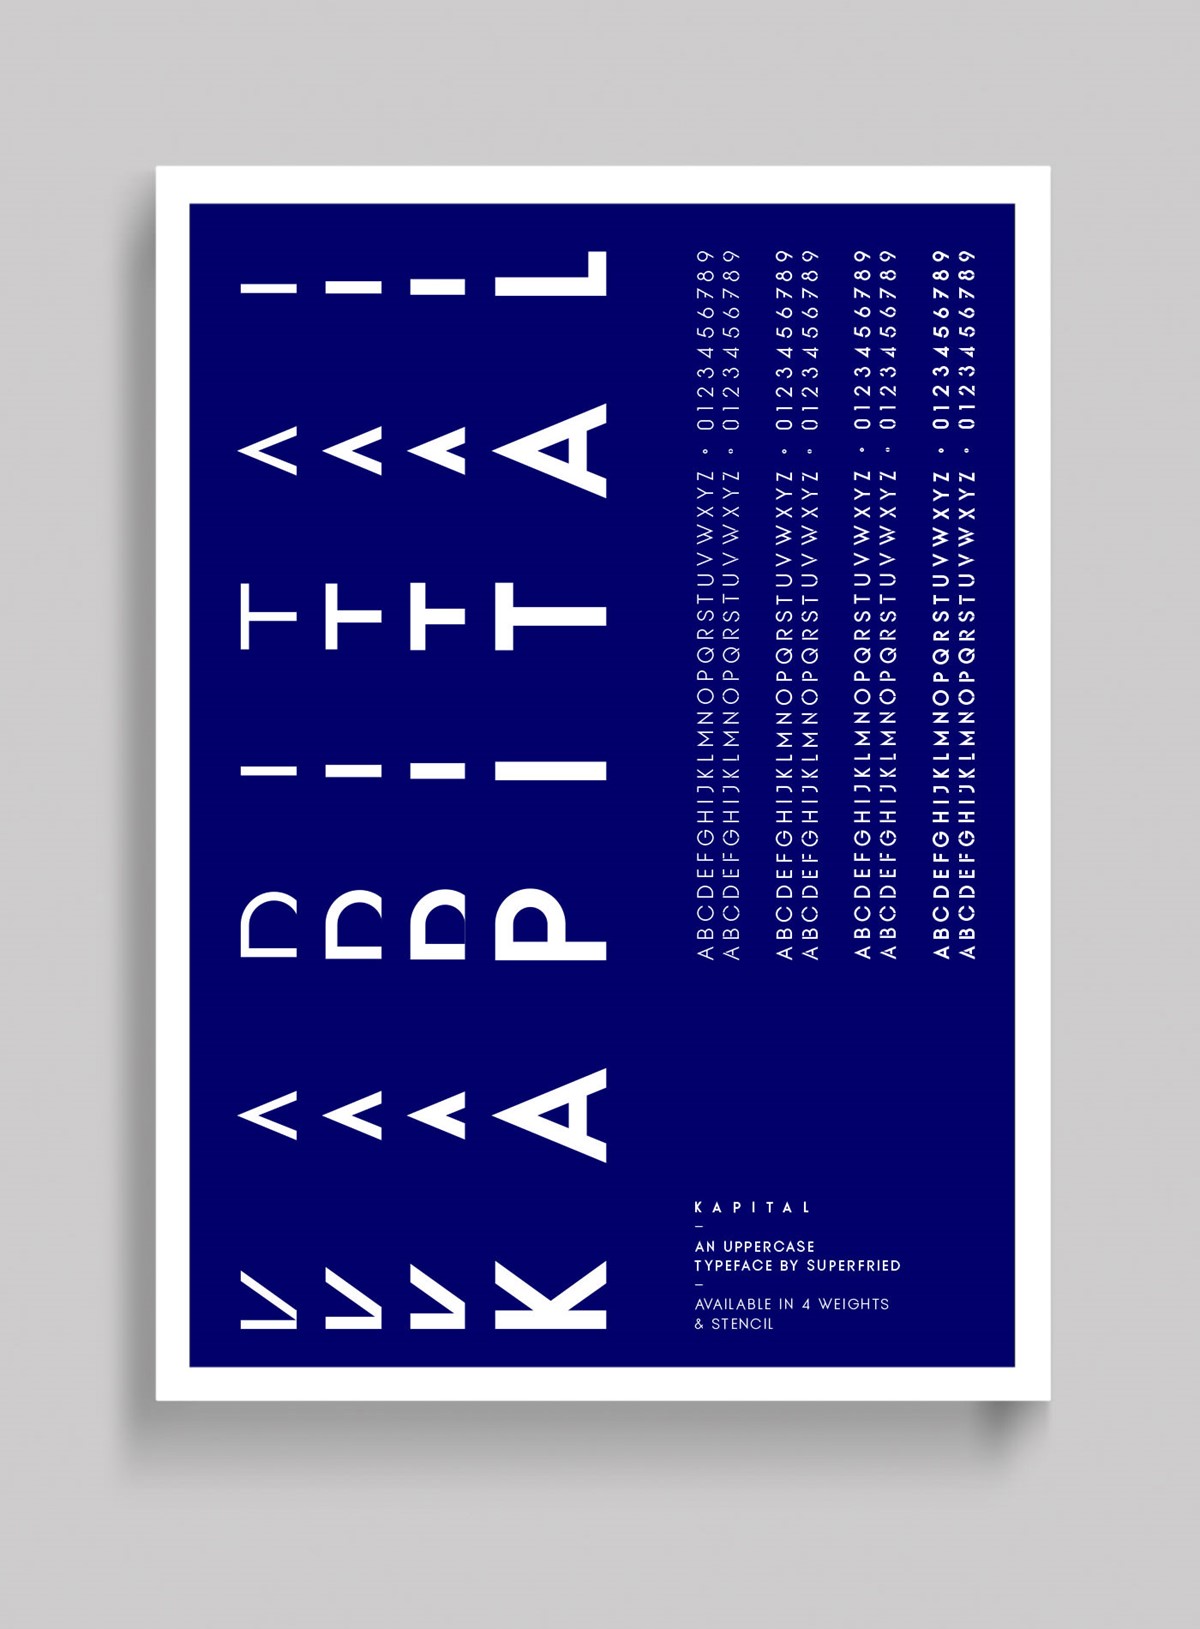 KAPITAL – Promo poster mock-up. Uppercase typeface designed by Superfried